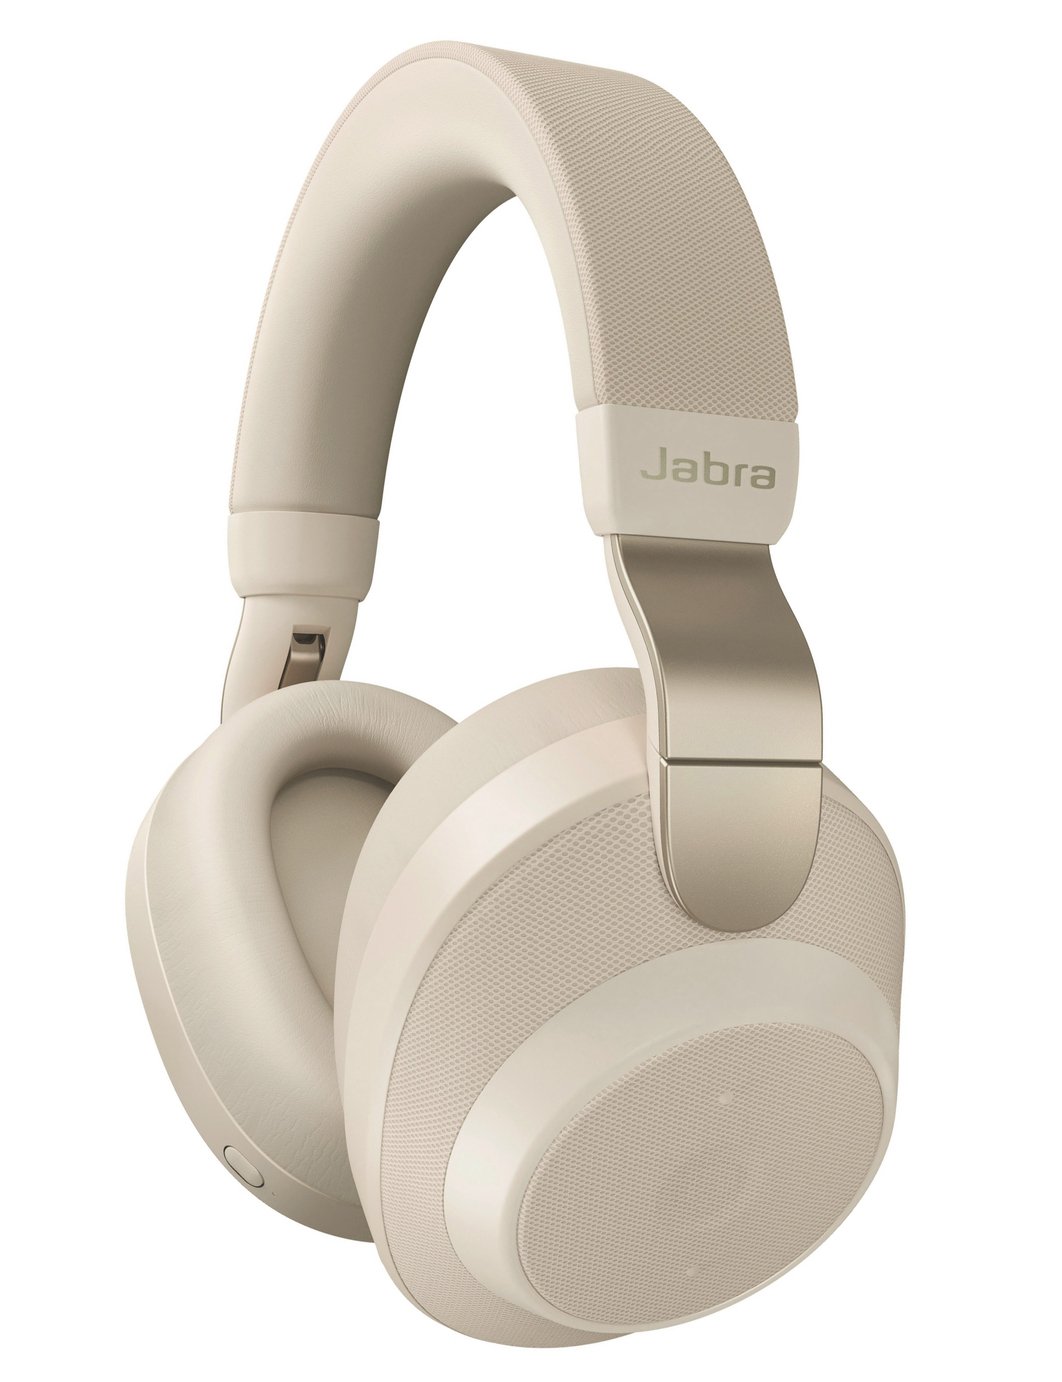 Jabra Elite 85h Over-Ear Wireless Headphones - Gold